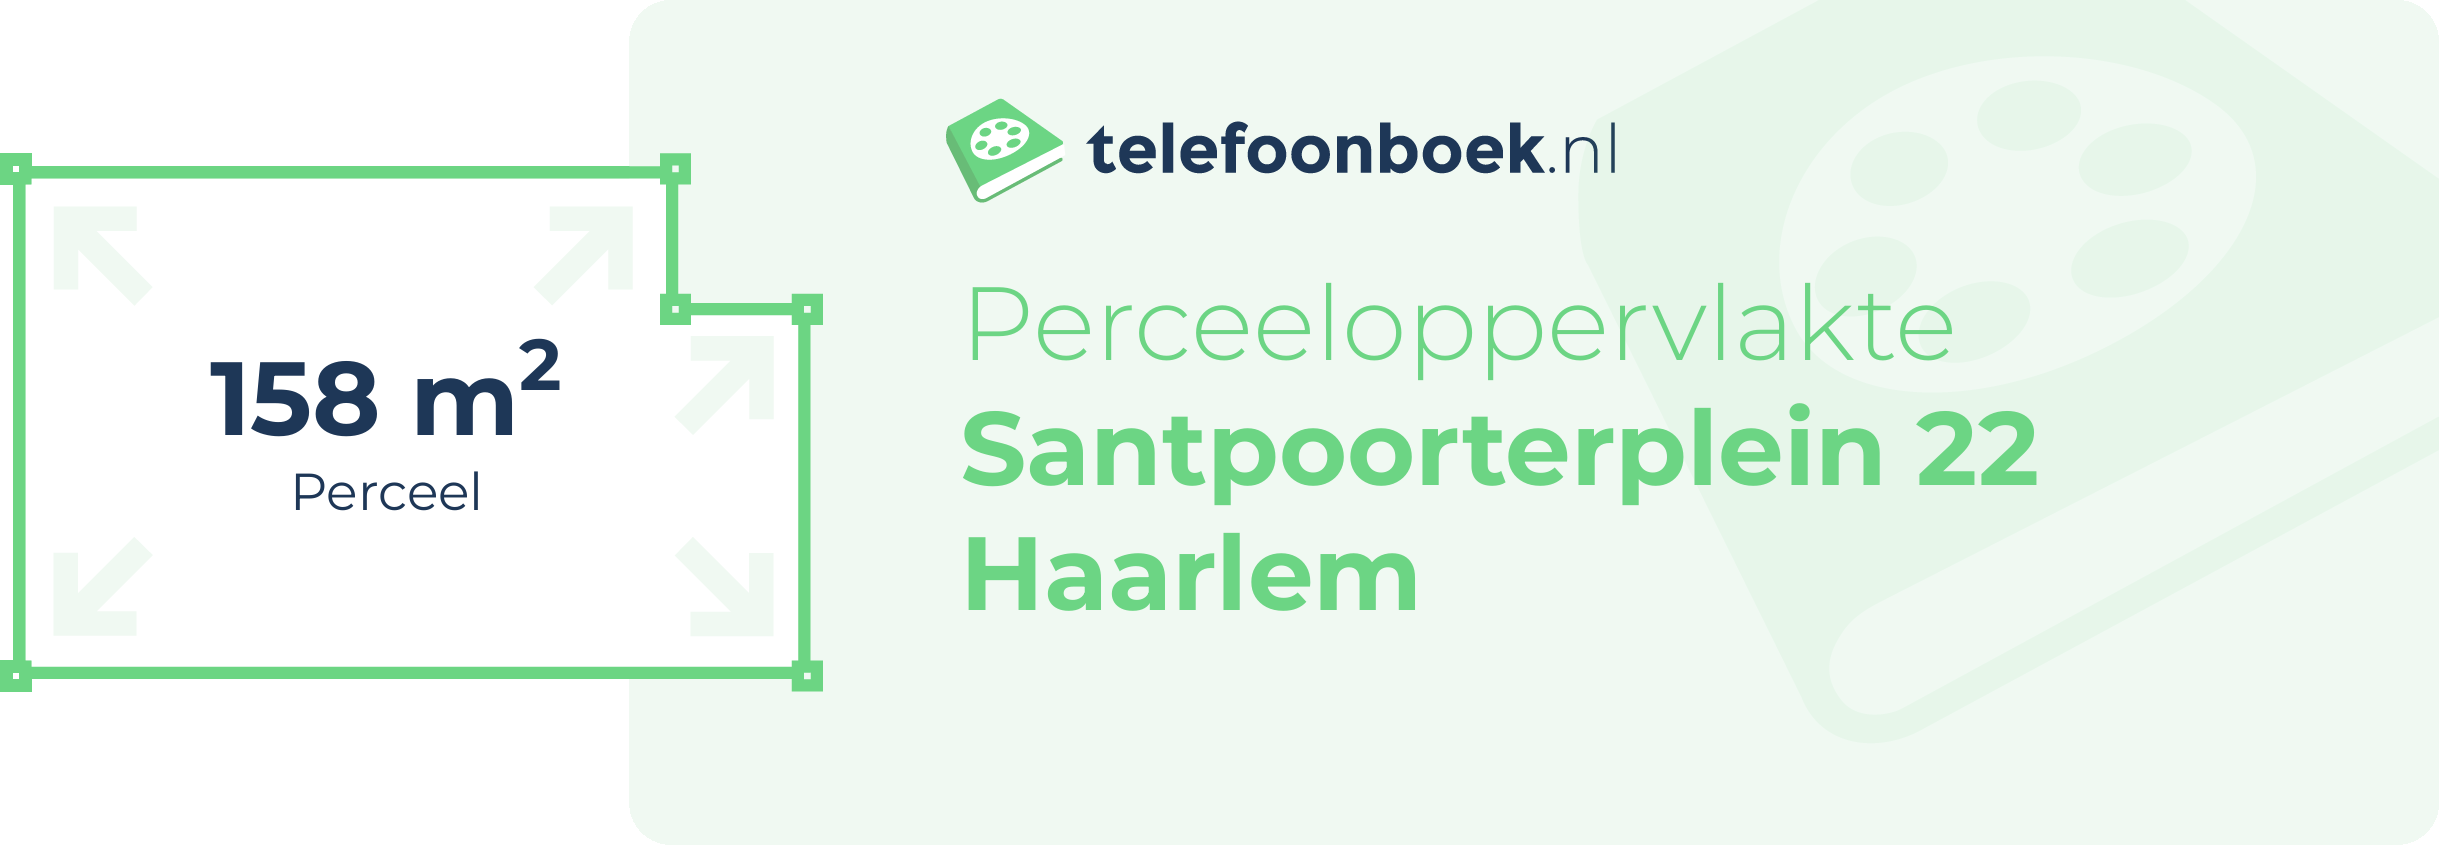 Perceeloppervlakte Santpoorterplein 22 Haarlem